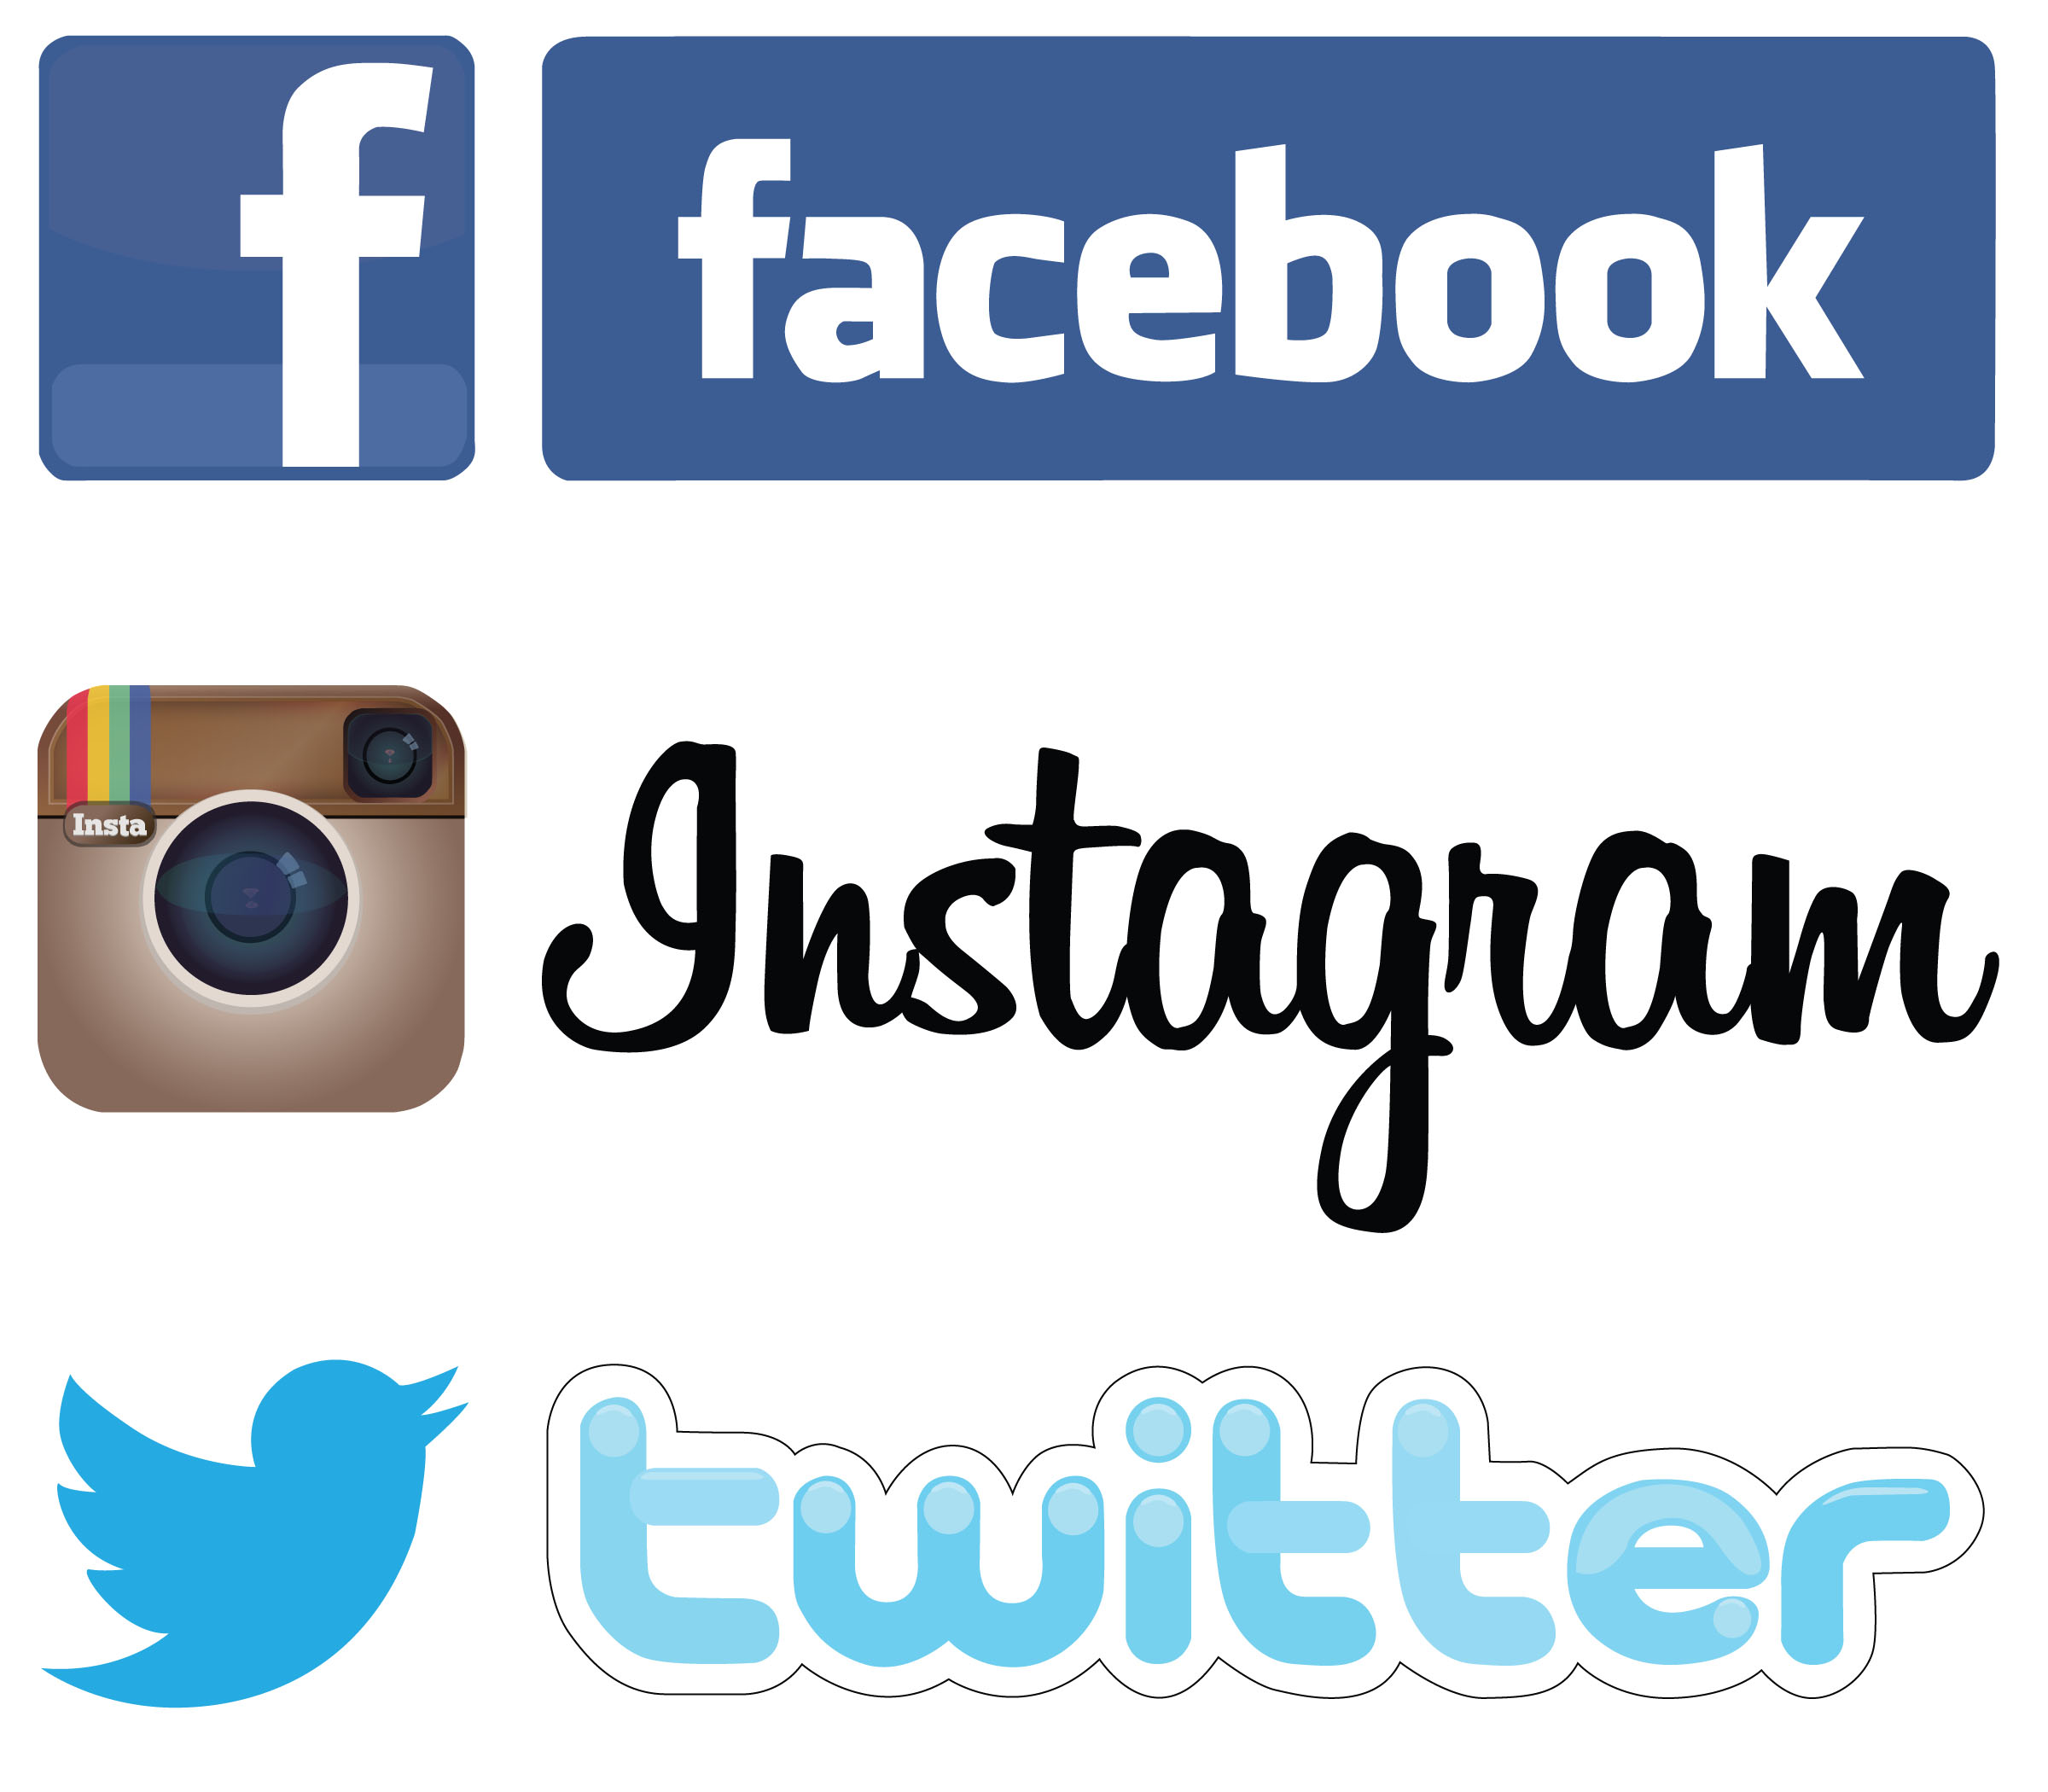 Social Media Facebook Twitter Instagram Icons